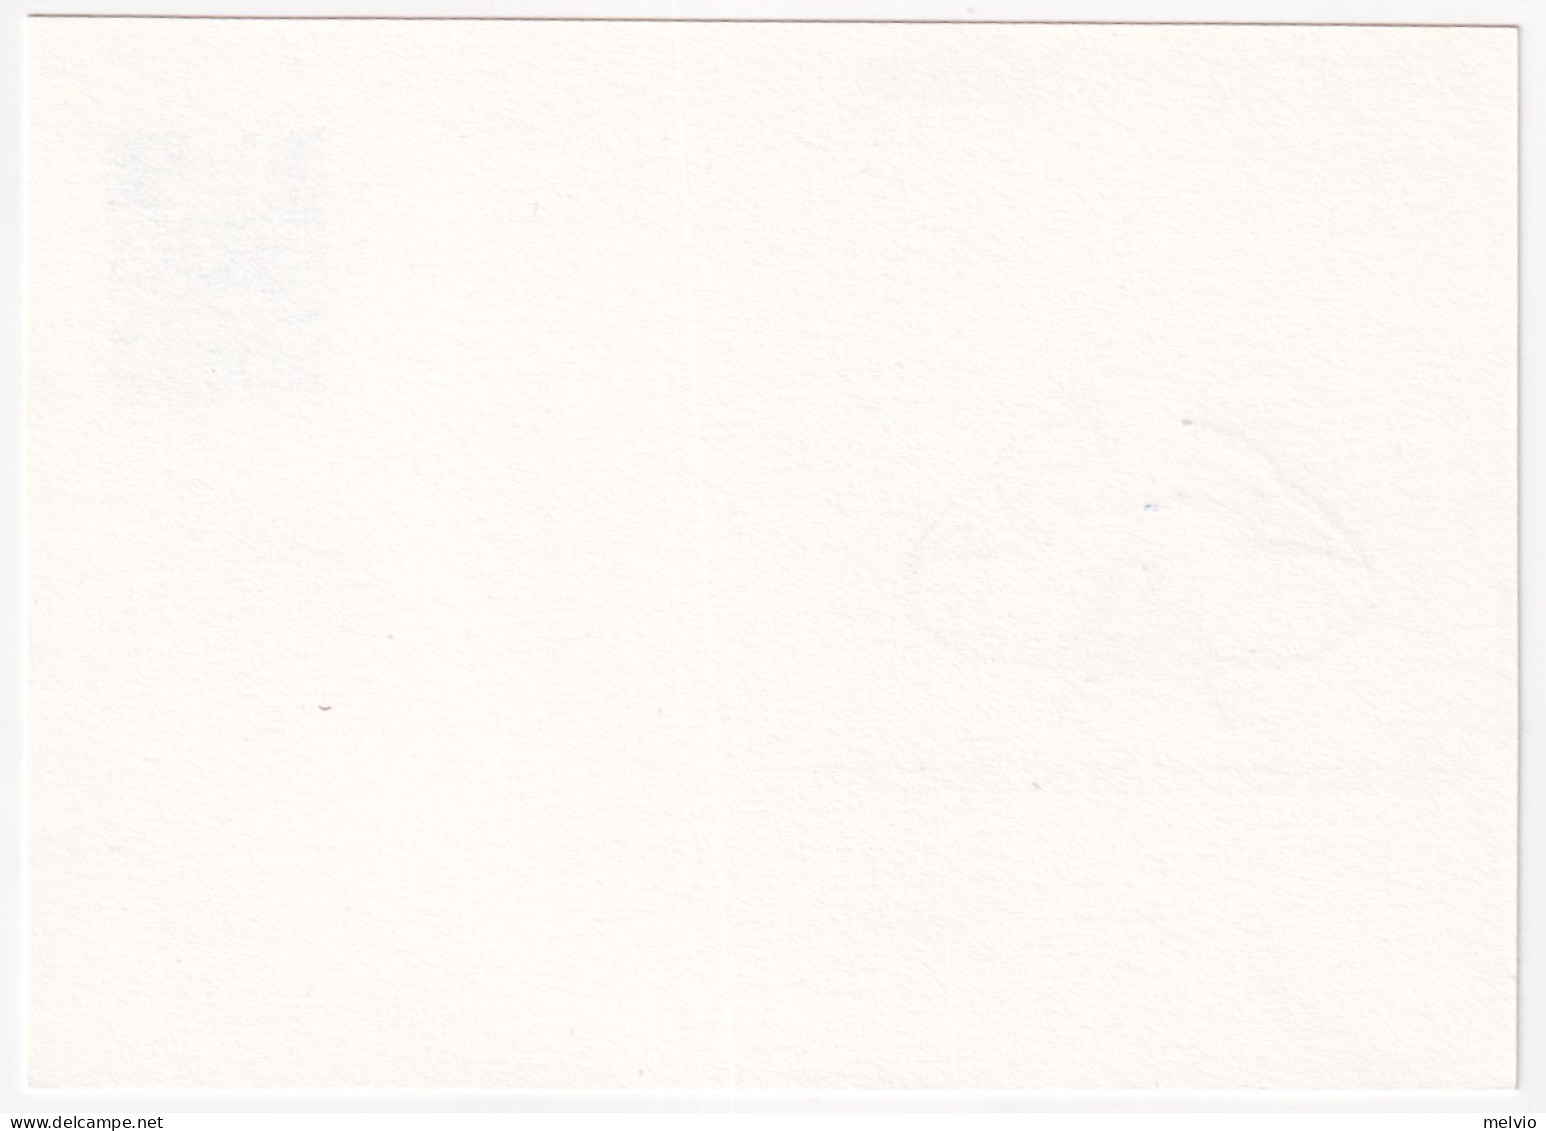 1993-Cartolina Postale Lire 700 Con Soprastampa IPZS FEDER. CLUBS BLUCERCHIATI,  - Postwaardestukken